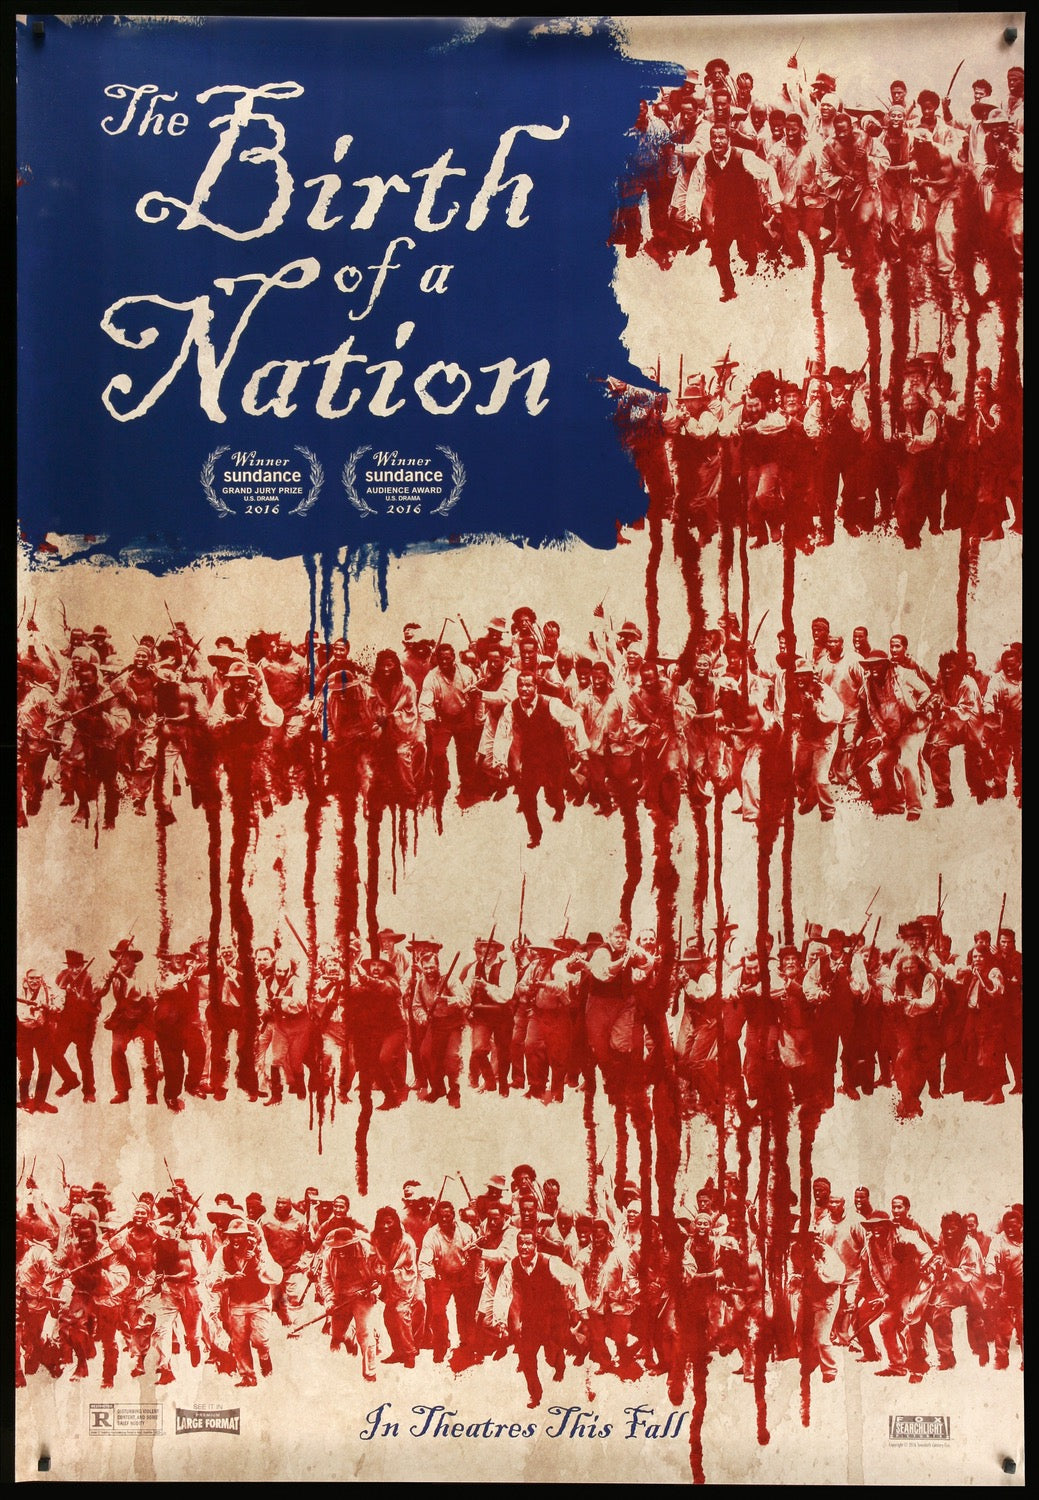 Birth of a Nation (2016) original movie poster for sale at Original Film Art